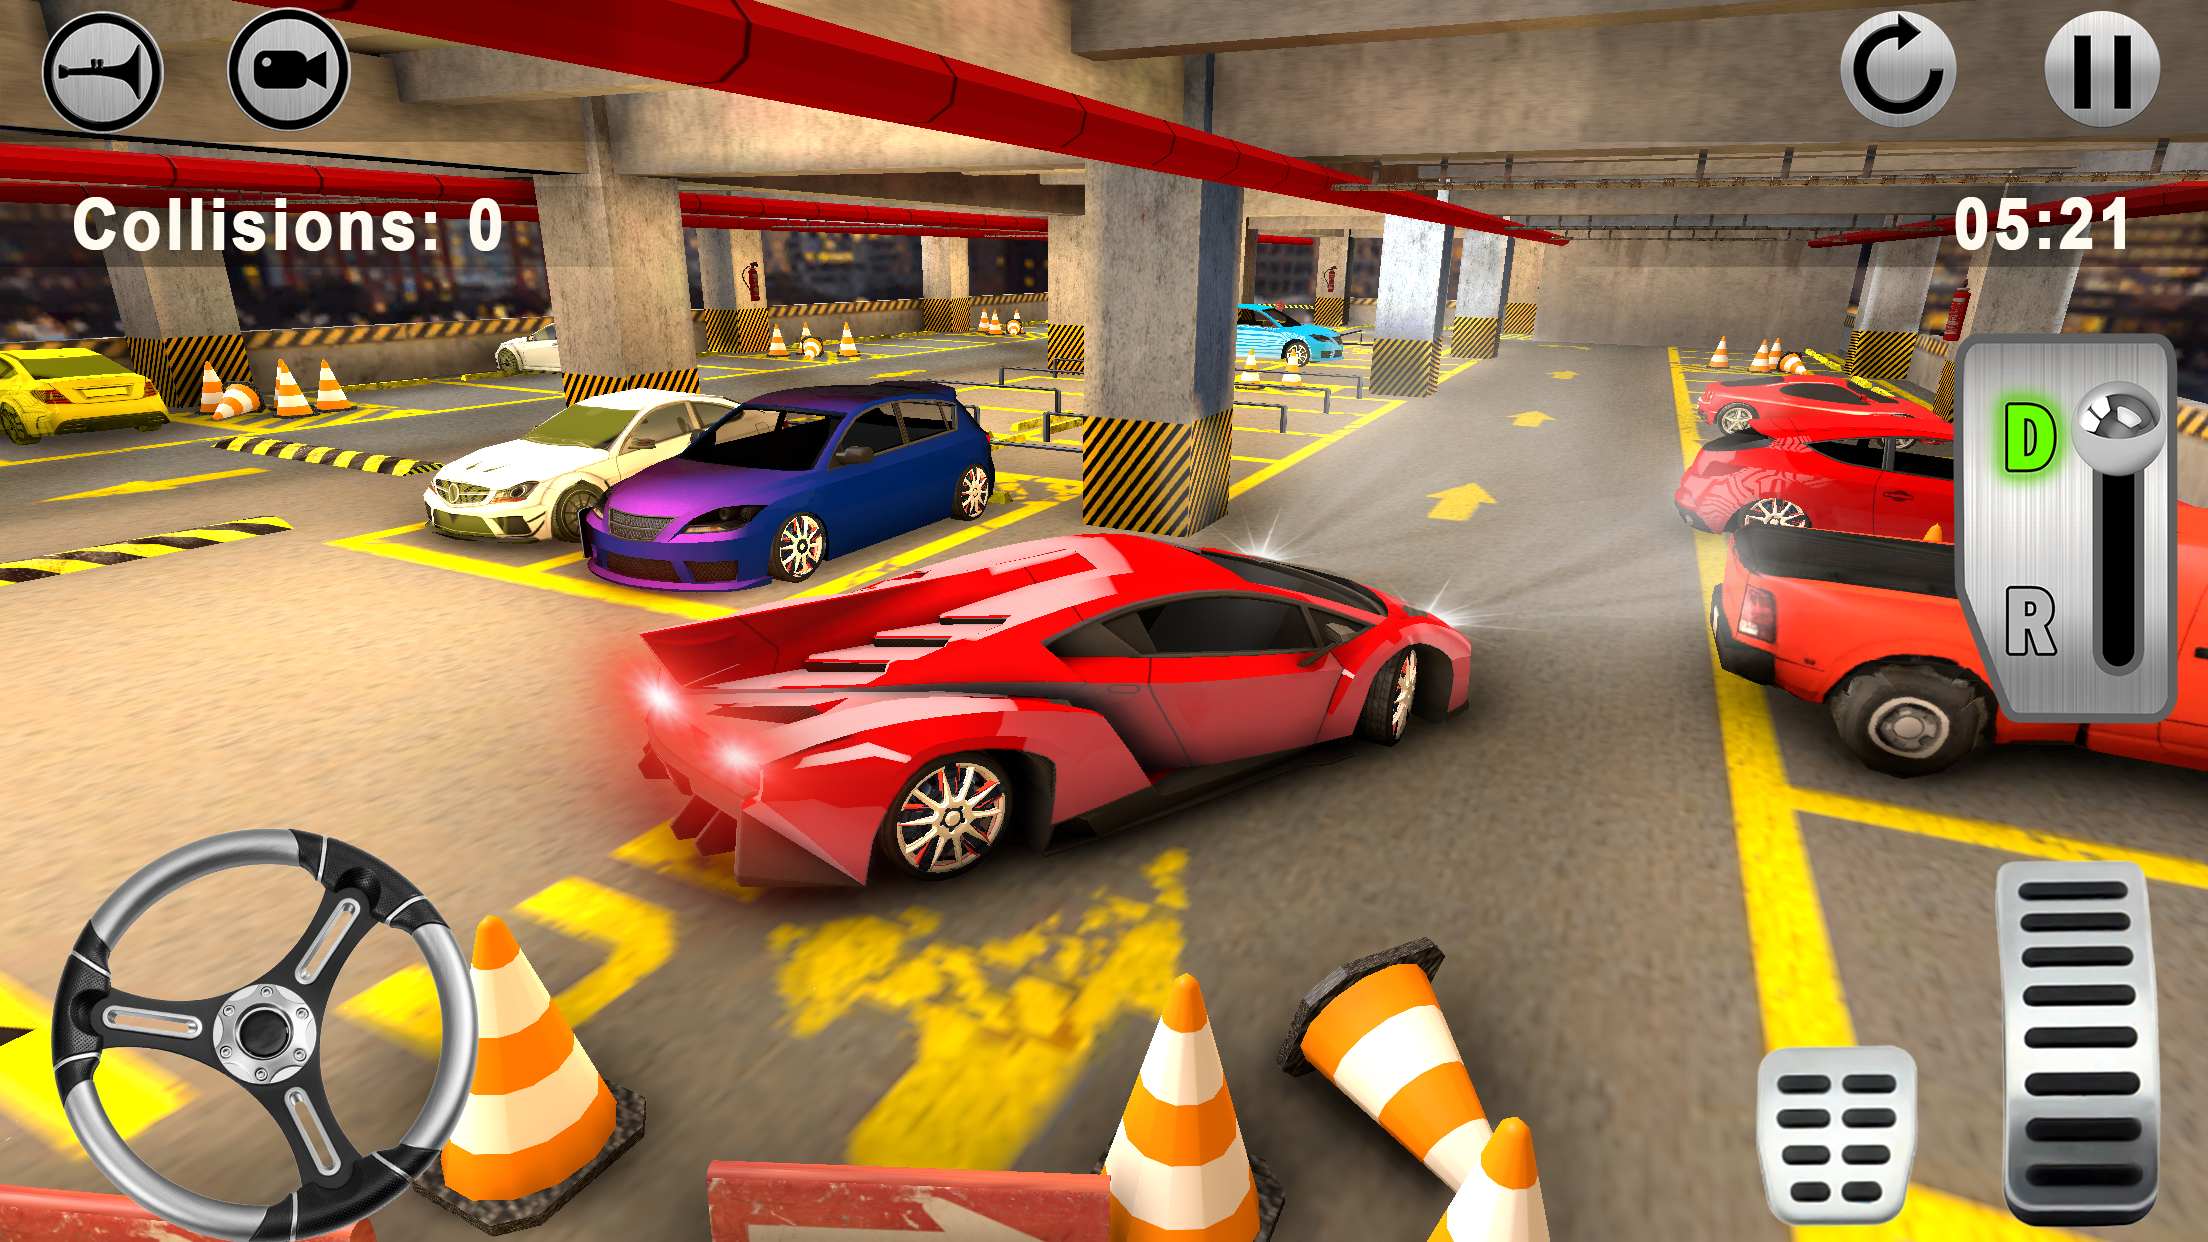 Screenshot 1 of Parkplatz - Simulatorspiel 1